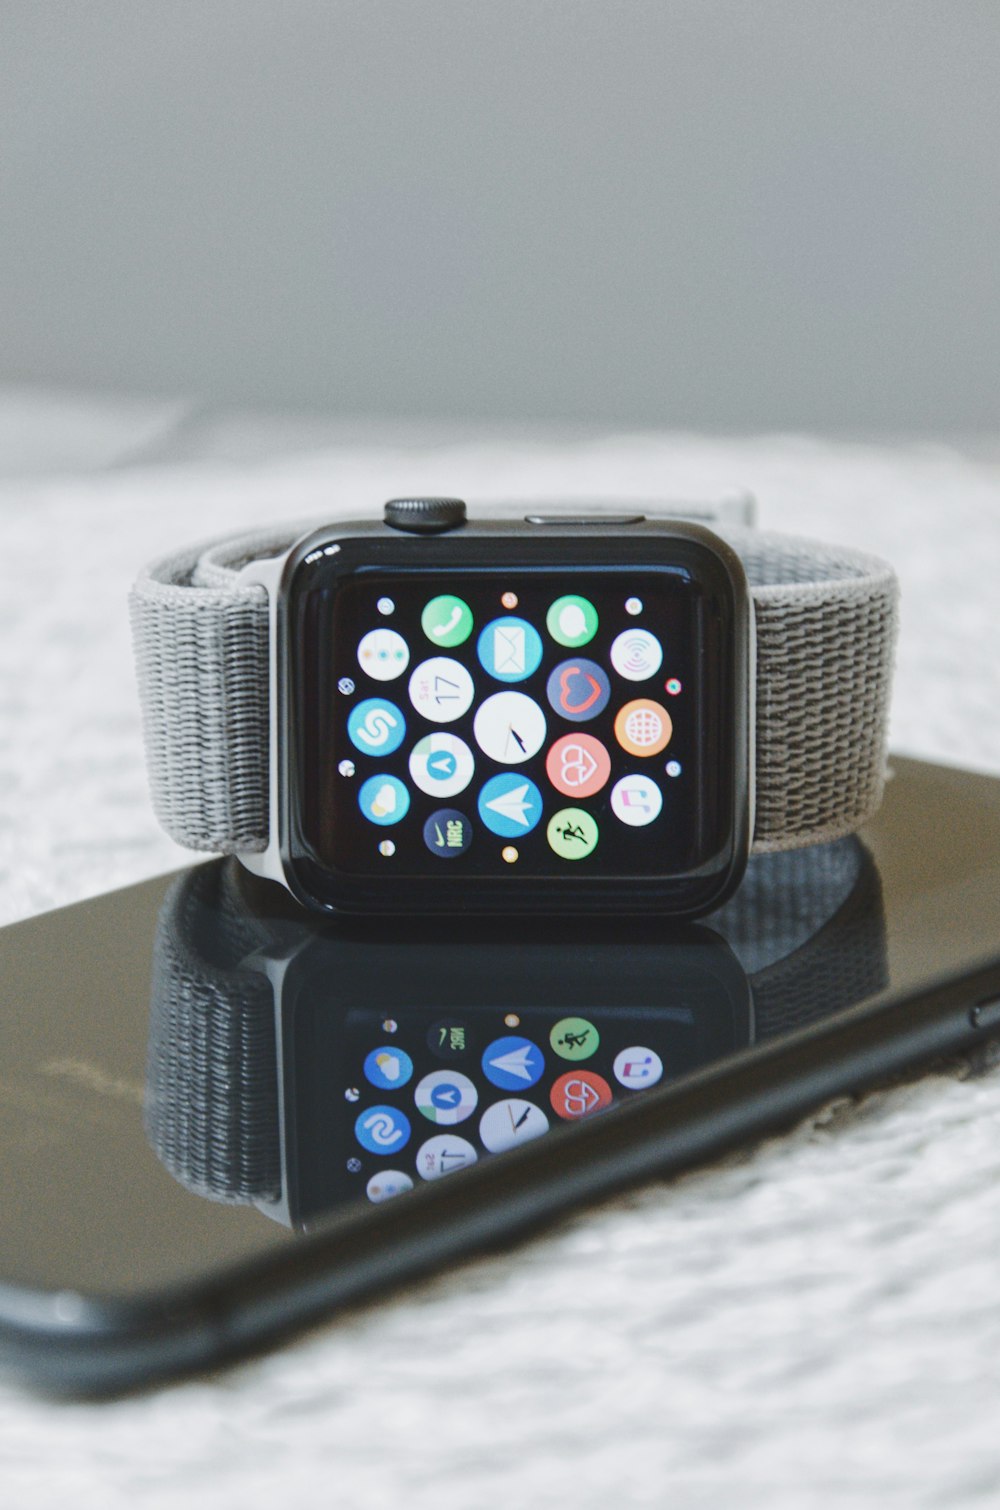 Apple Watch preto com faixa cinza no iPhone